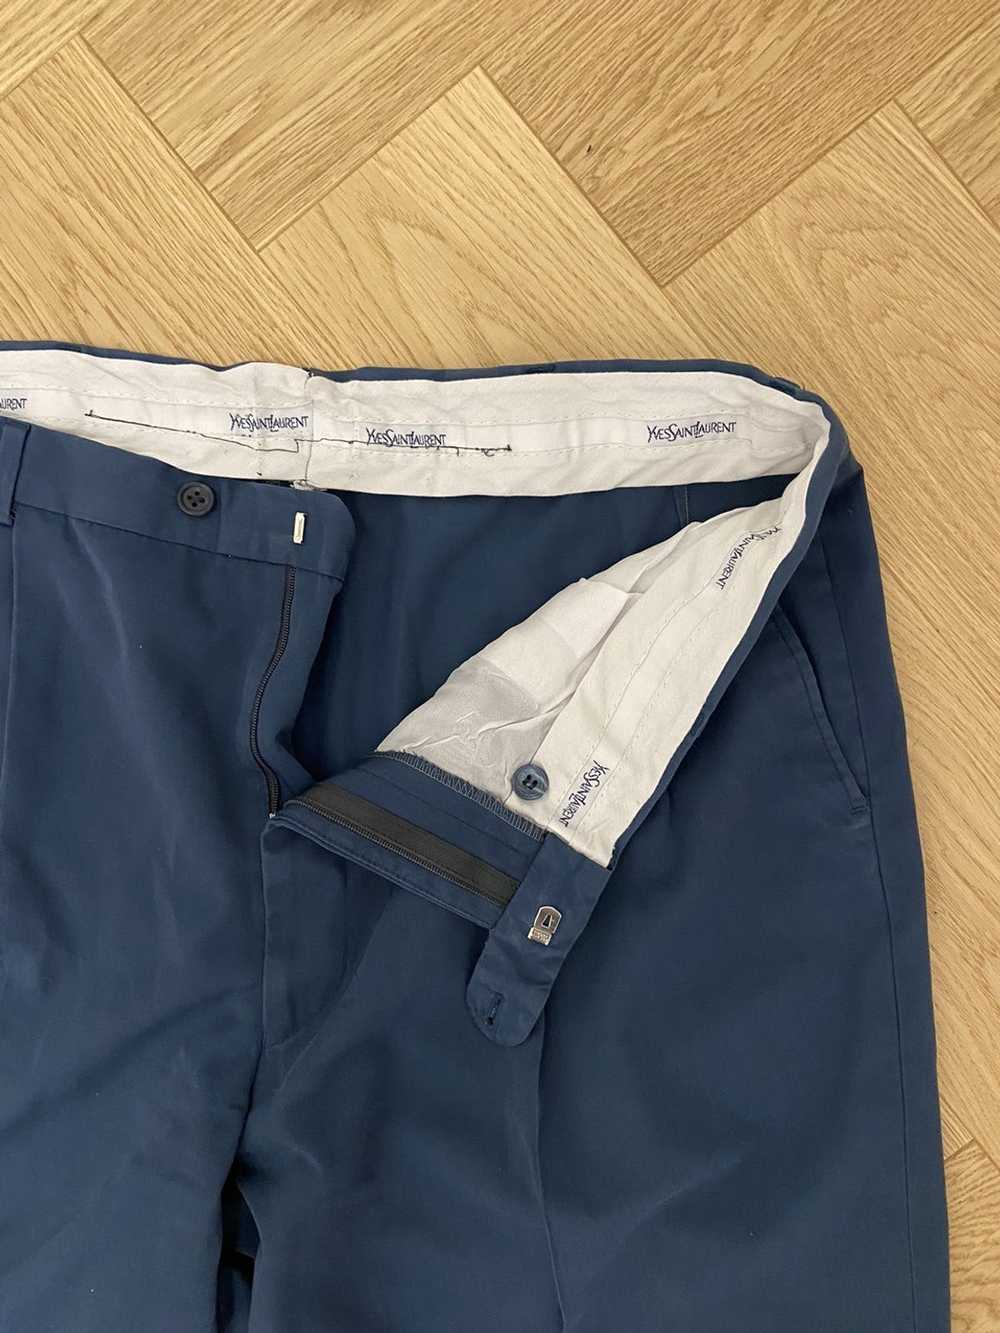 Yves Saint Laurent Yvessaintlaurent trousers - image 3